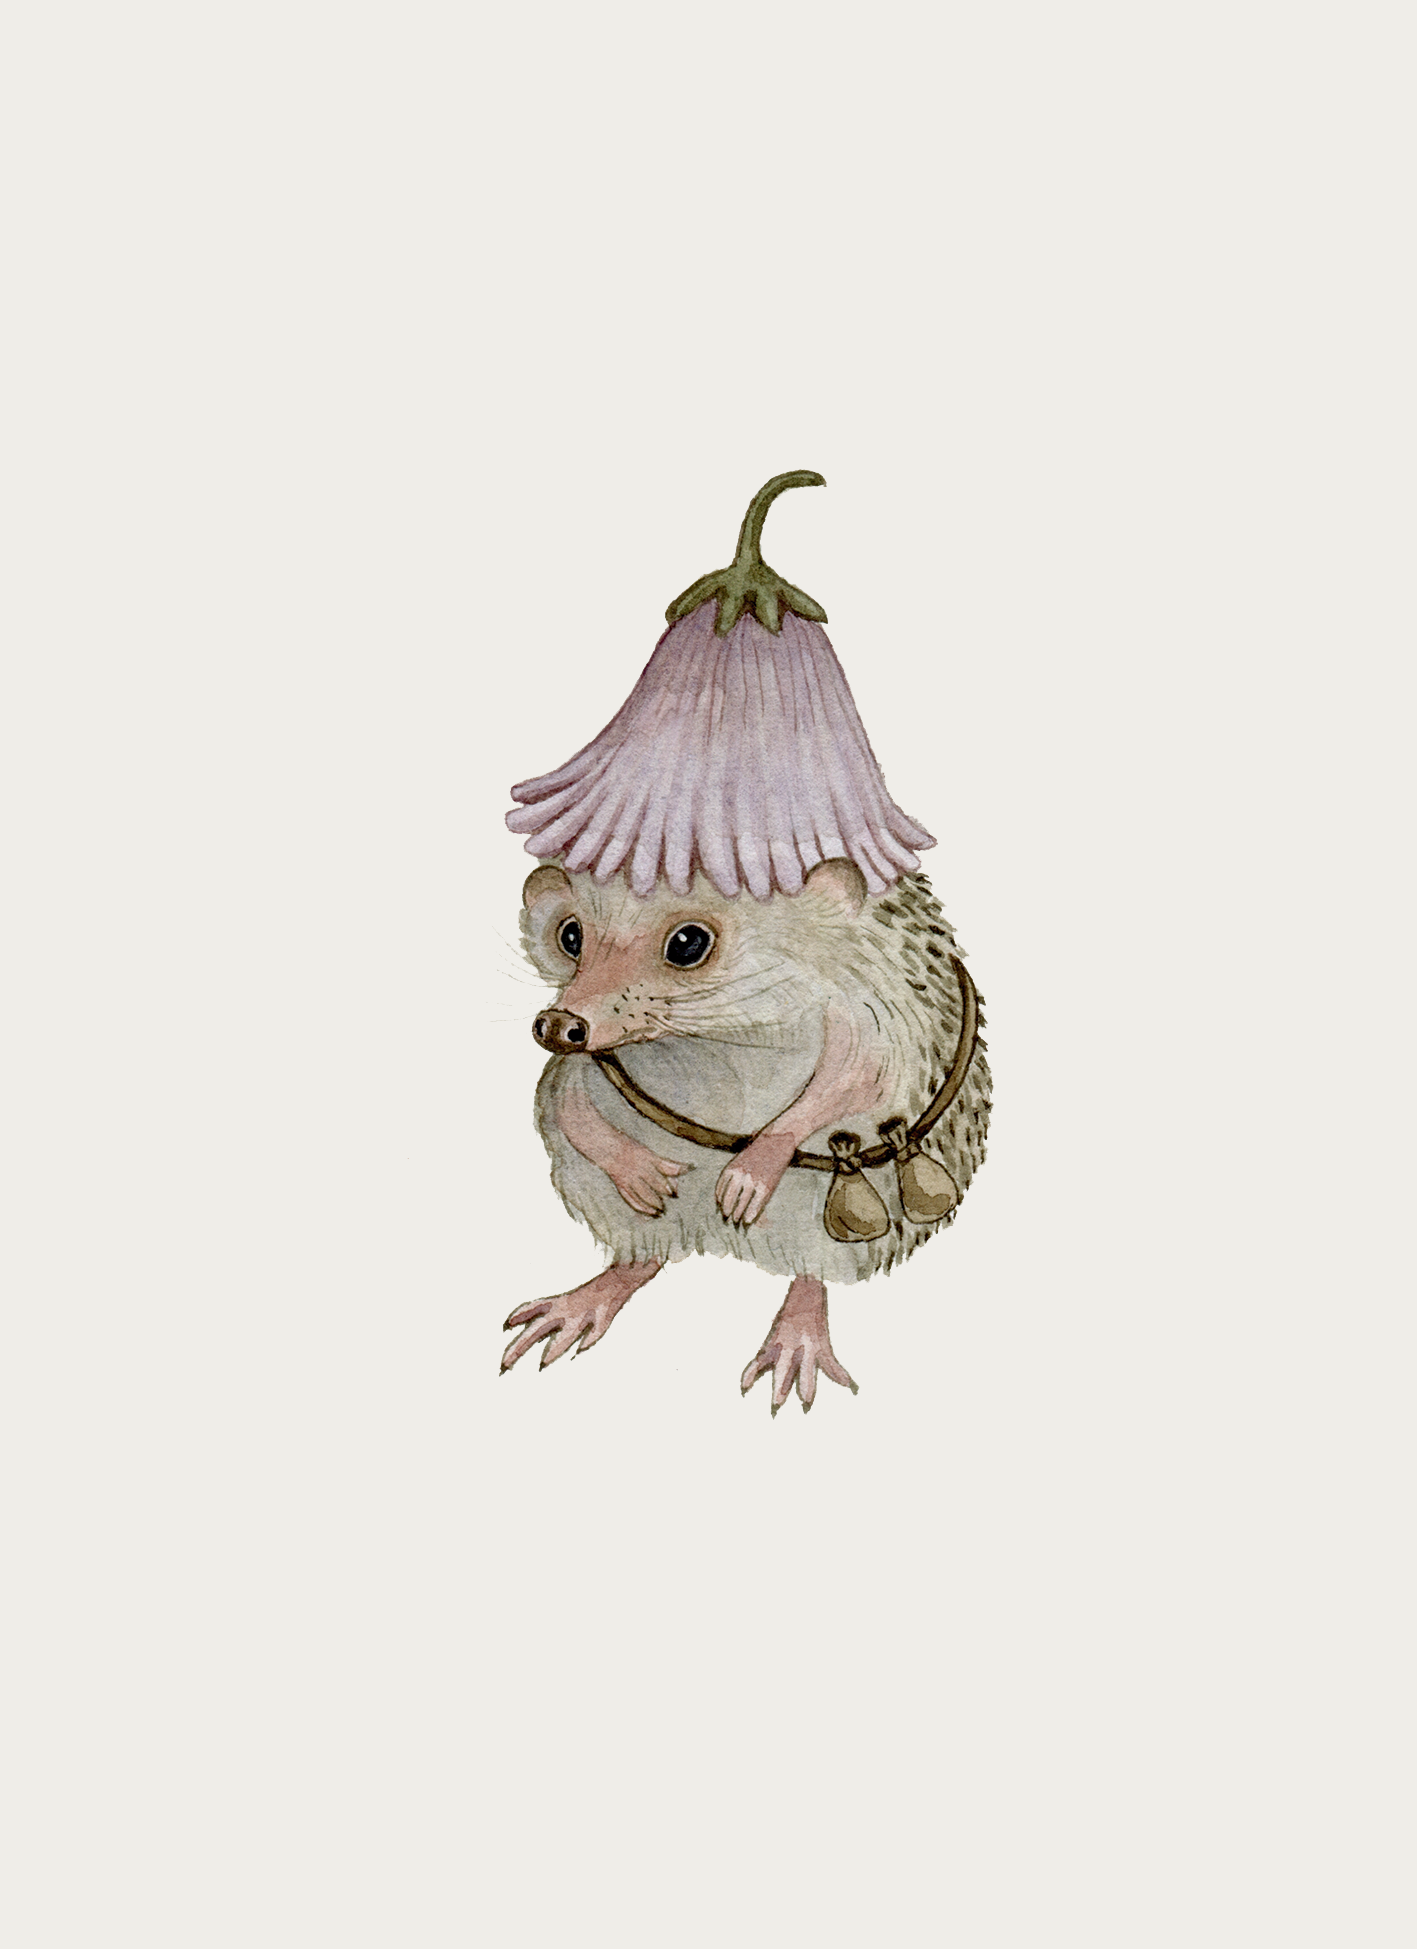 Hedgehog with Flower Hat  - Fine Art Giclee Print